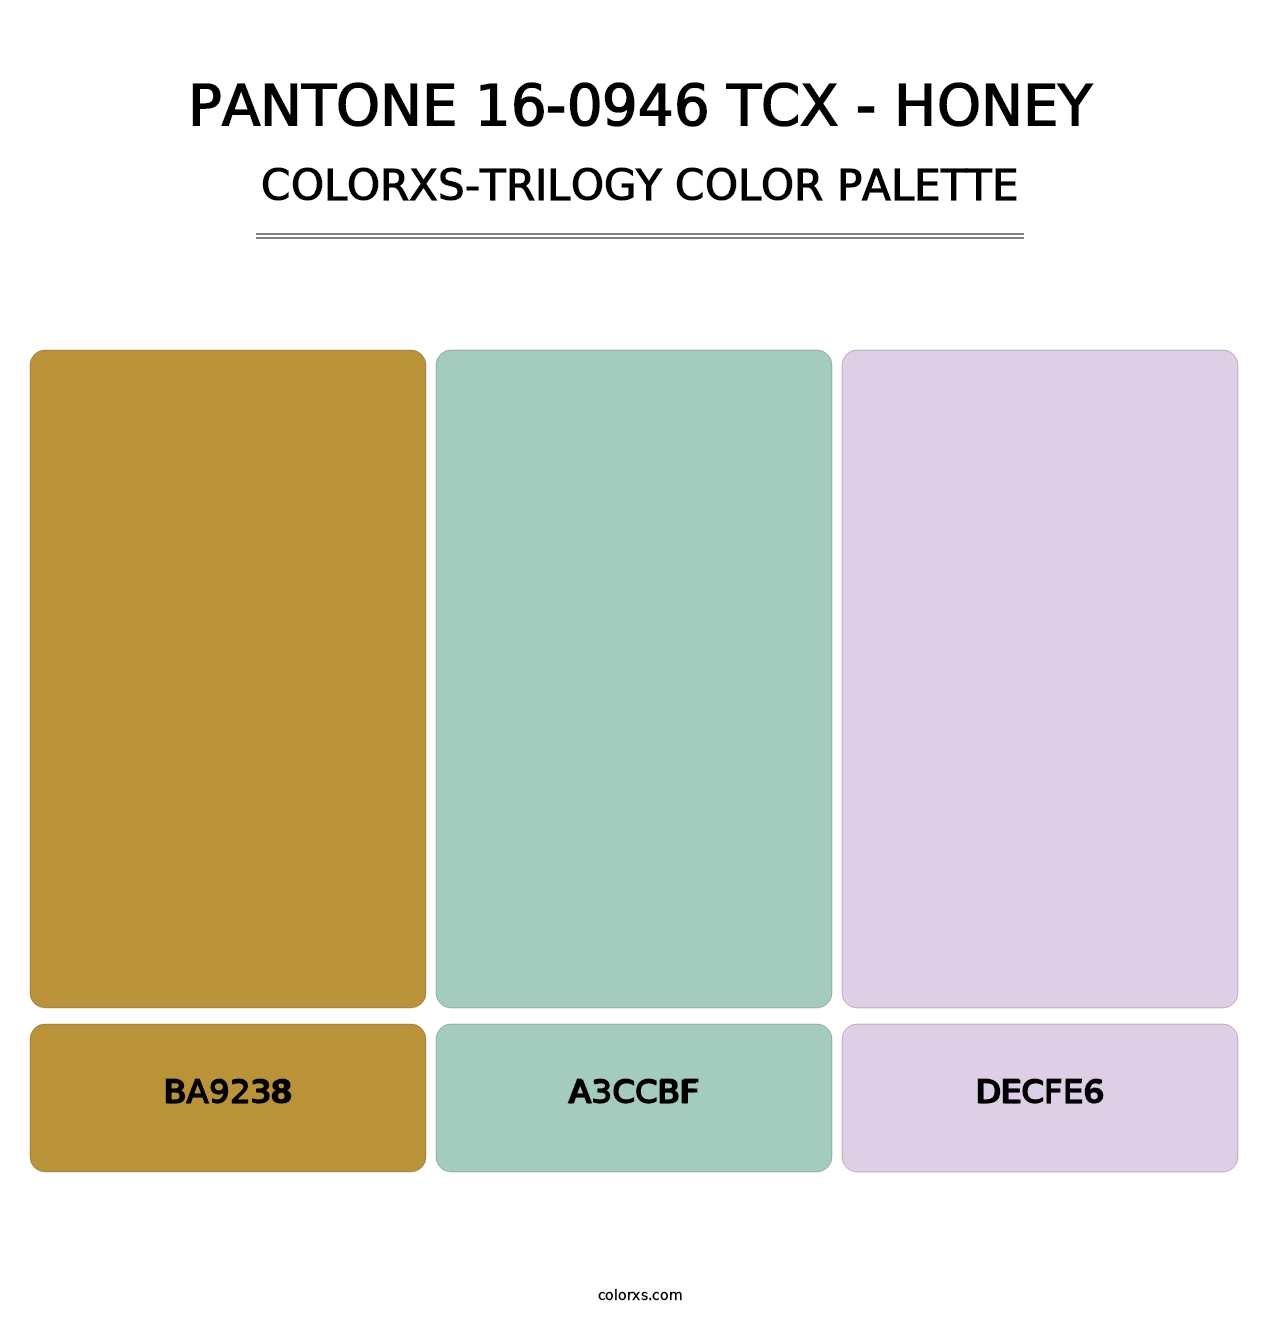 PANTONE 16-0946 TCX - Honey - Colorxs Trilogy Palette